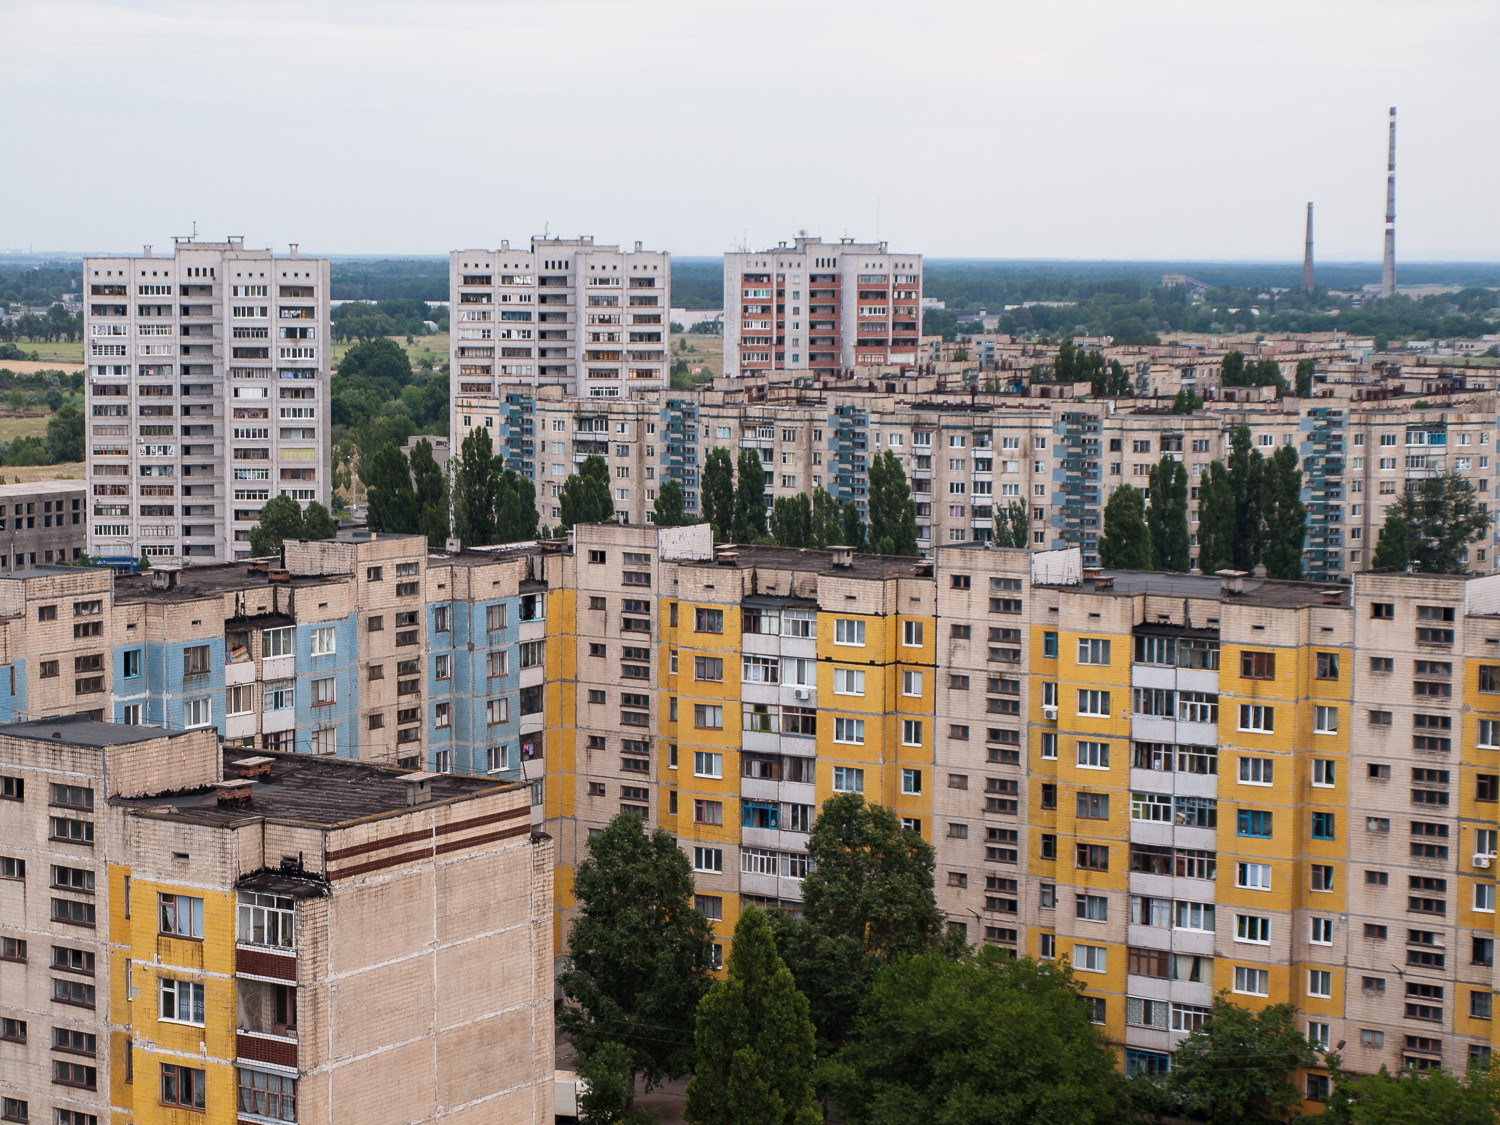  Apartment blocks in the industrial town of Kamianske, formerly Dniprodzerzhynsk, east Ukraine. 